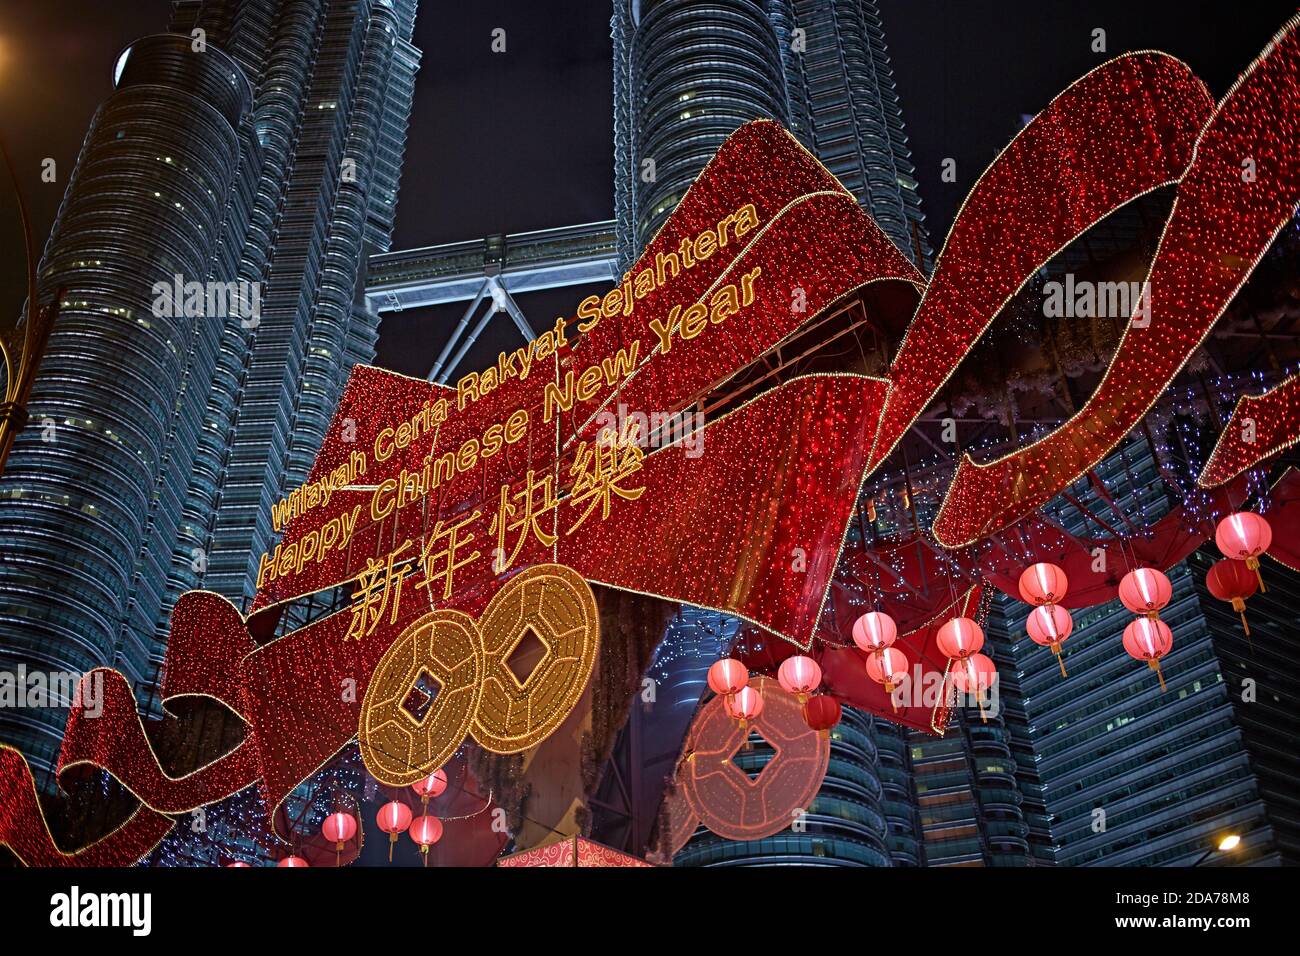 Kuala Lumpur, Malaysia, February 2016. Chinese New Year's luminous sign in front of the Petronas towers illuminated at night. Stock Photo